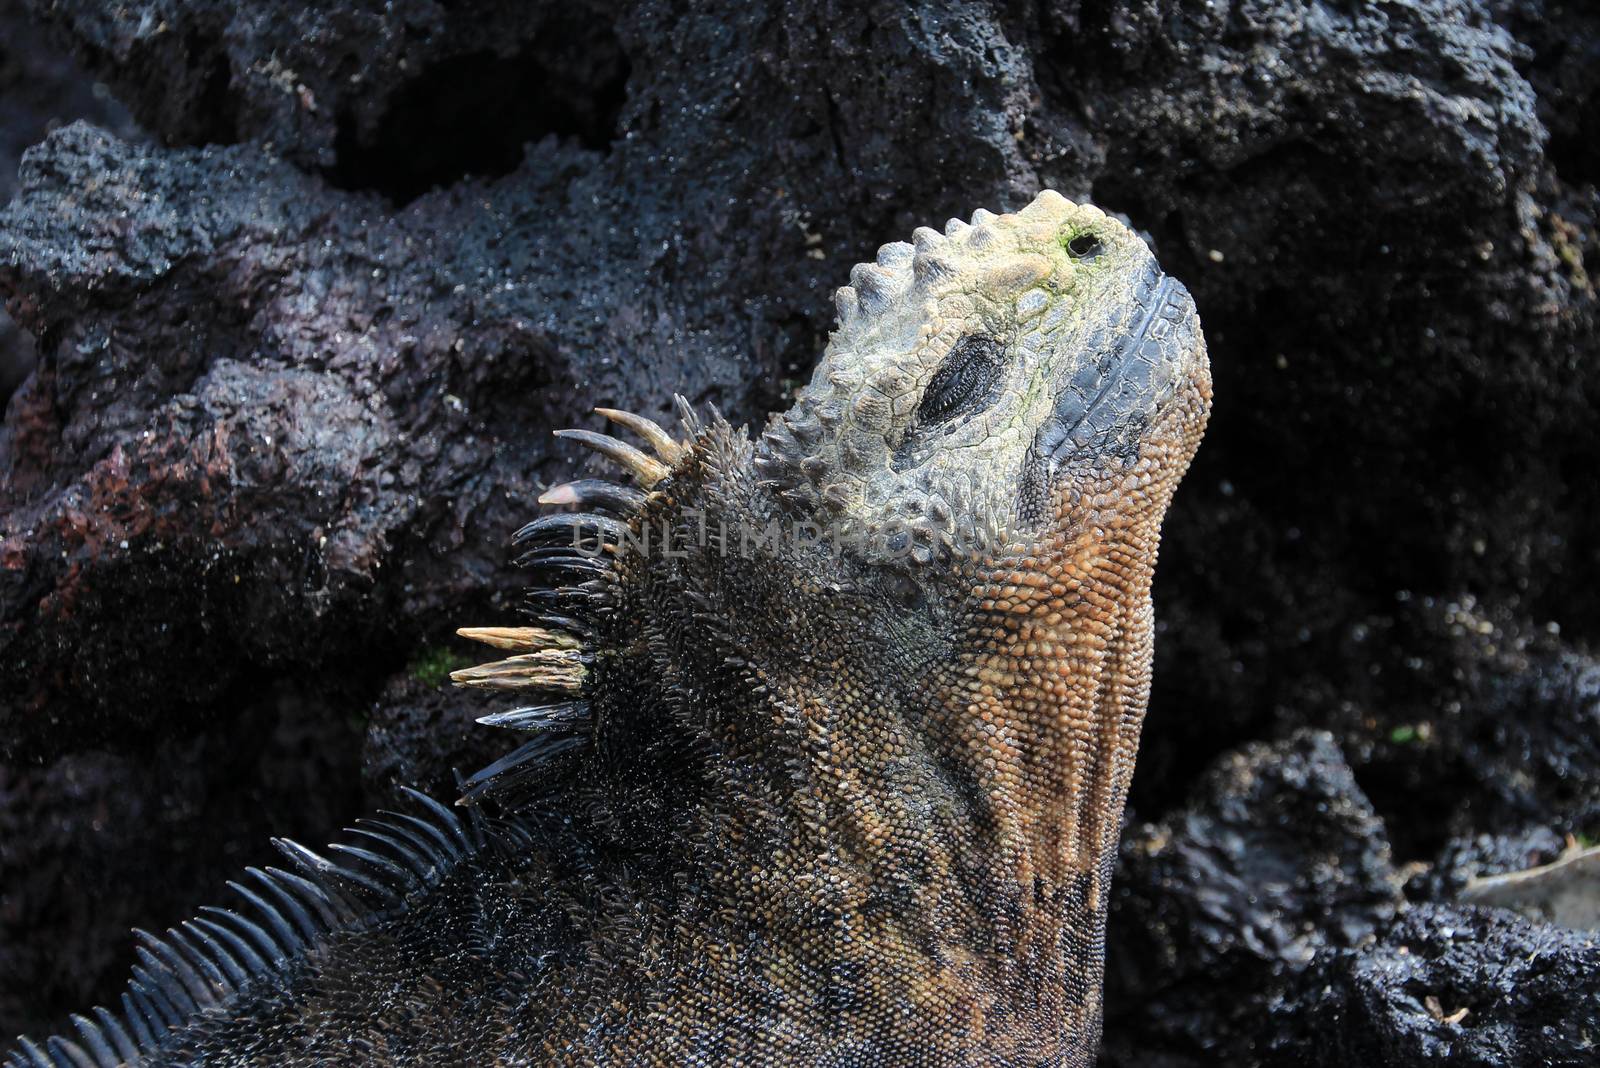 A Galapagos Marine Iguana head, amblyrhynchus cristatus